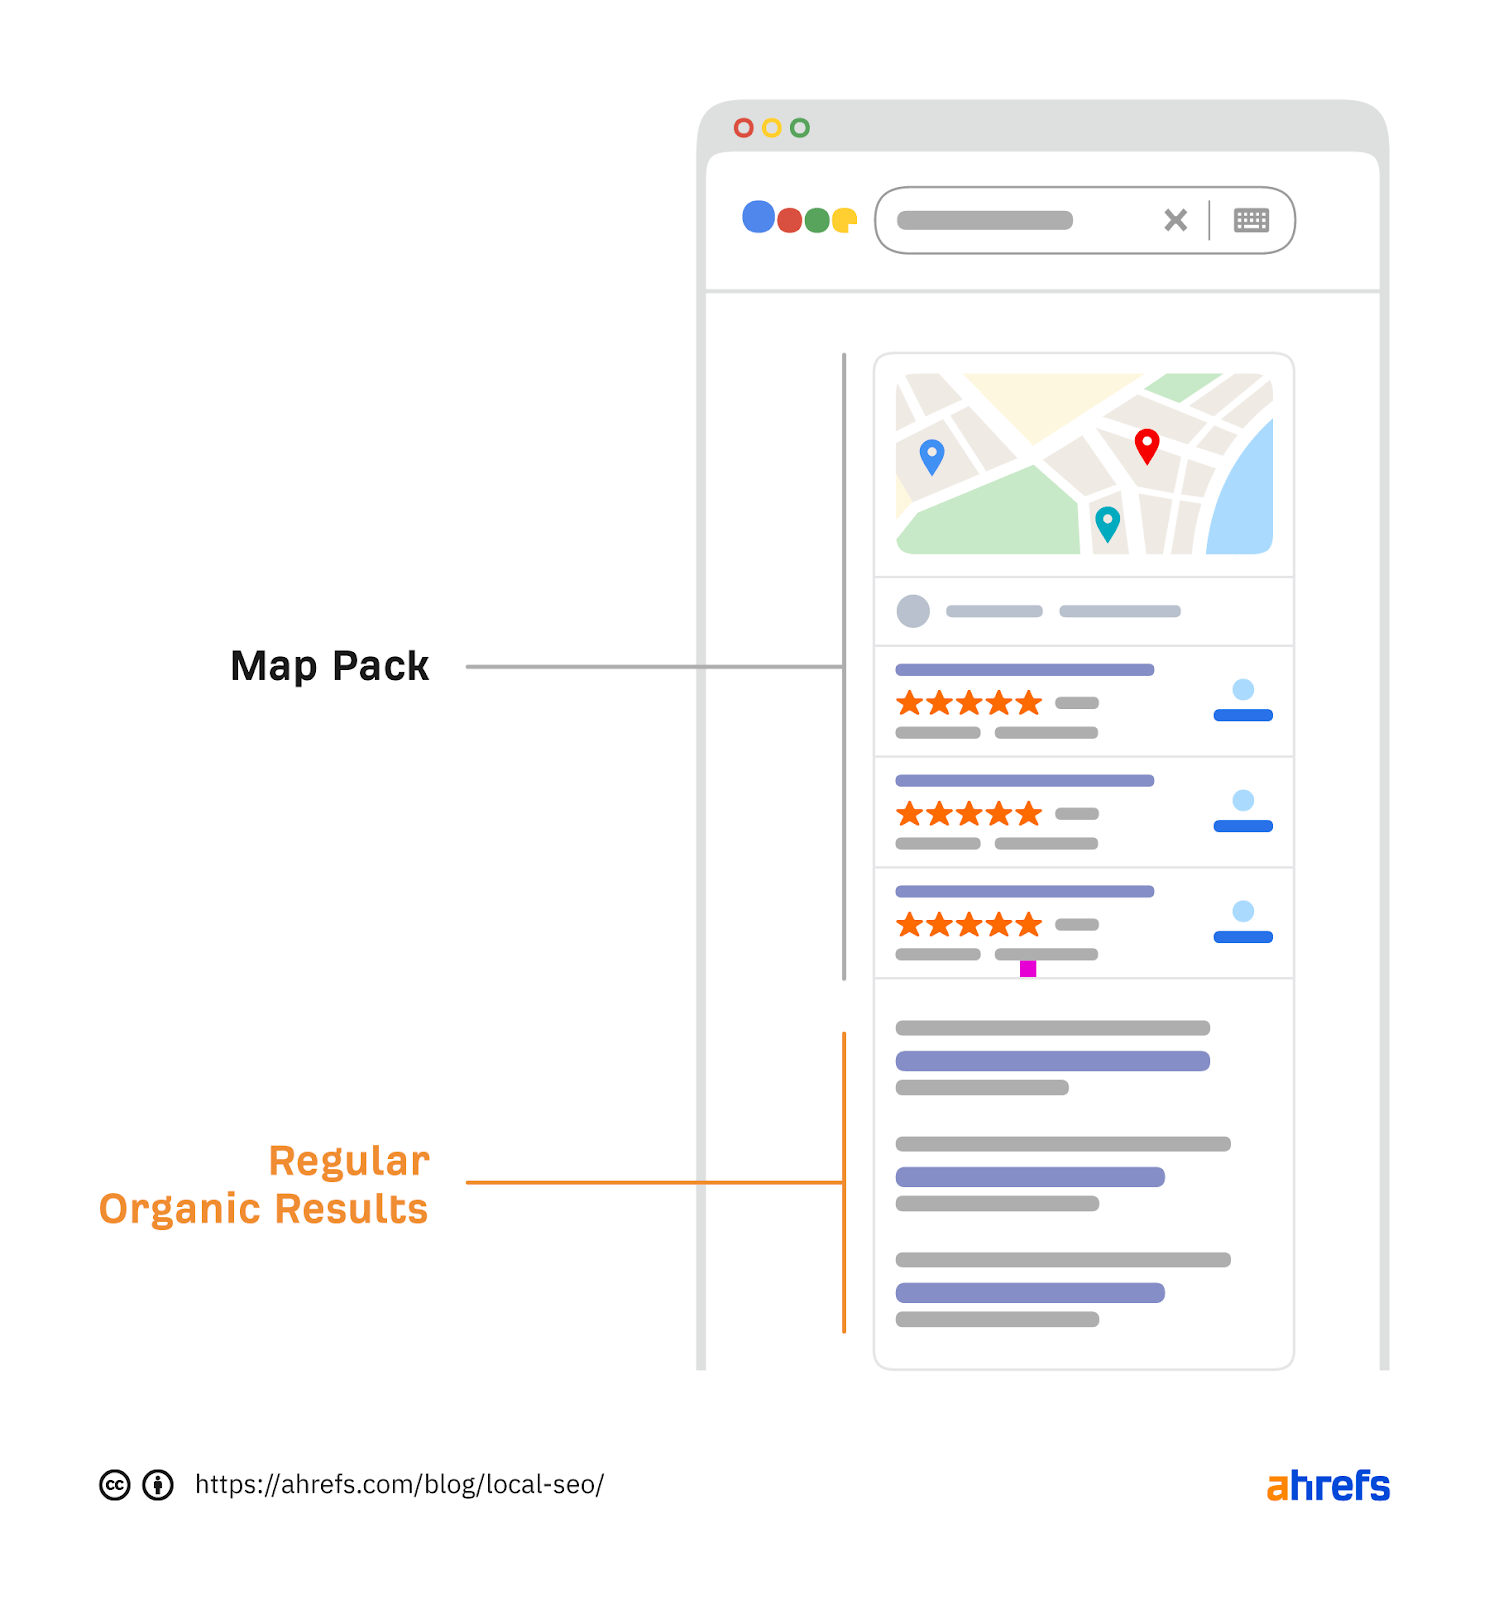 Google Map Pack vs. regular organic results